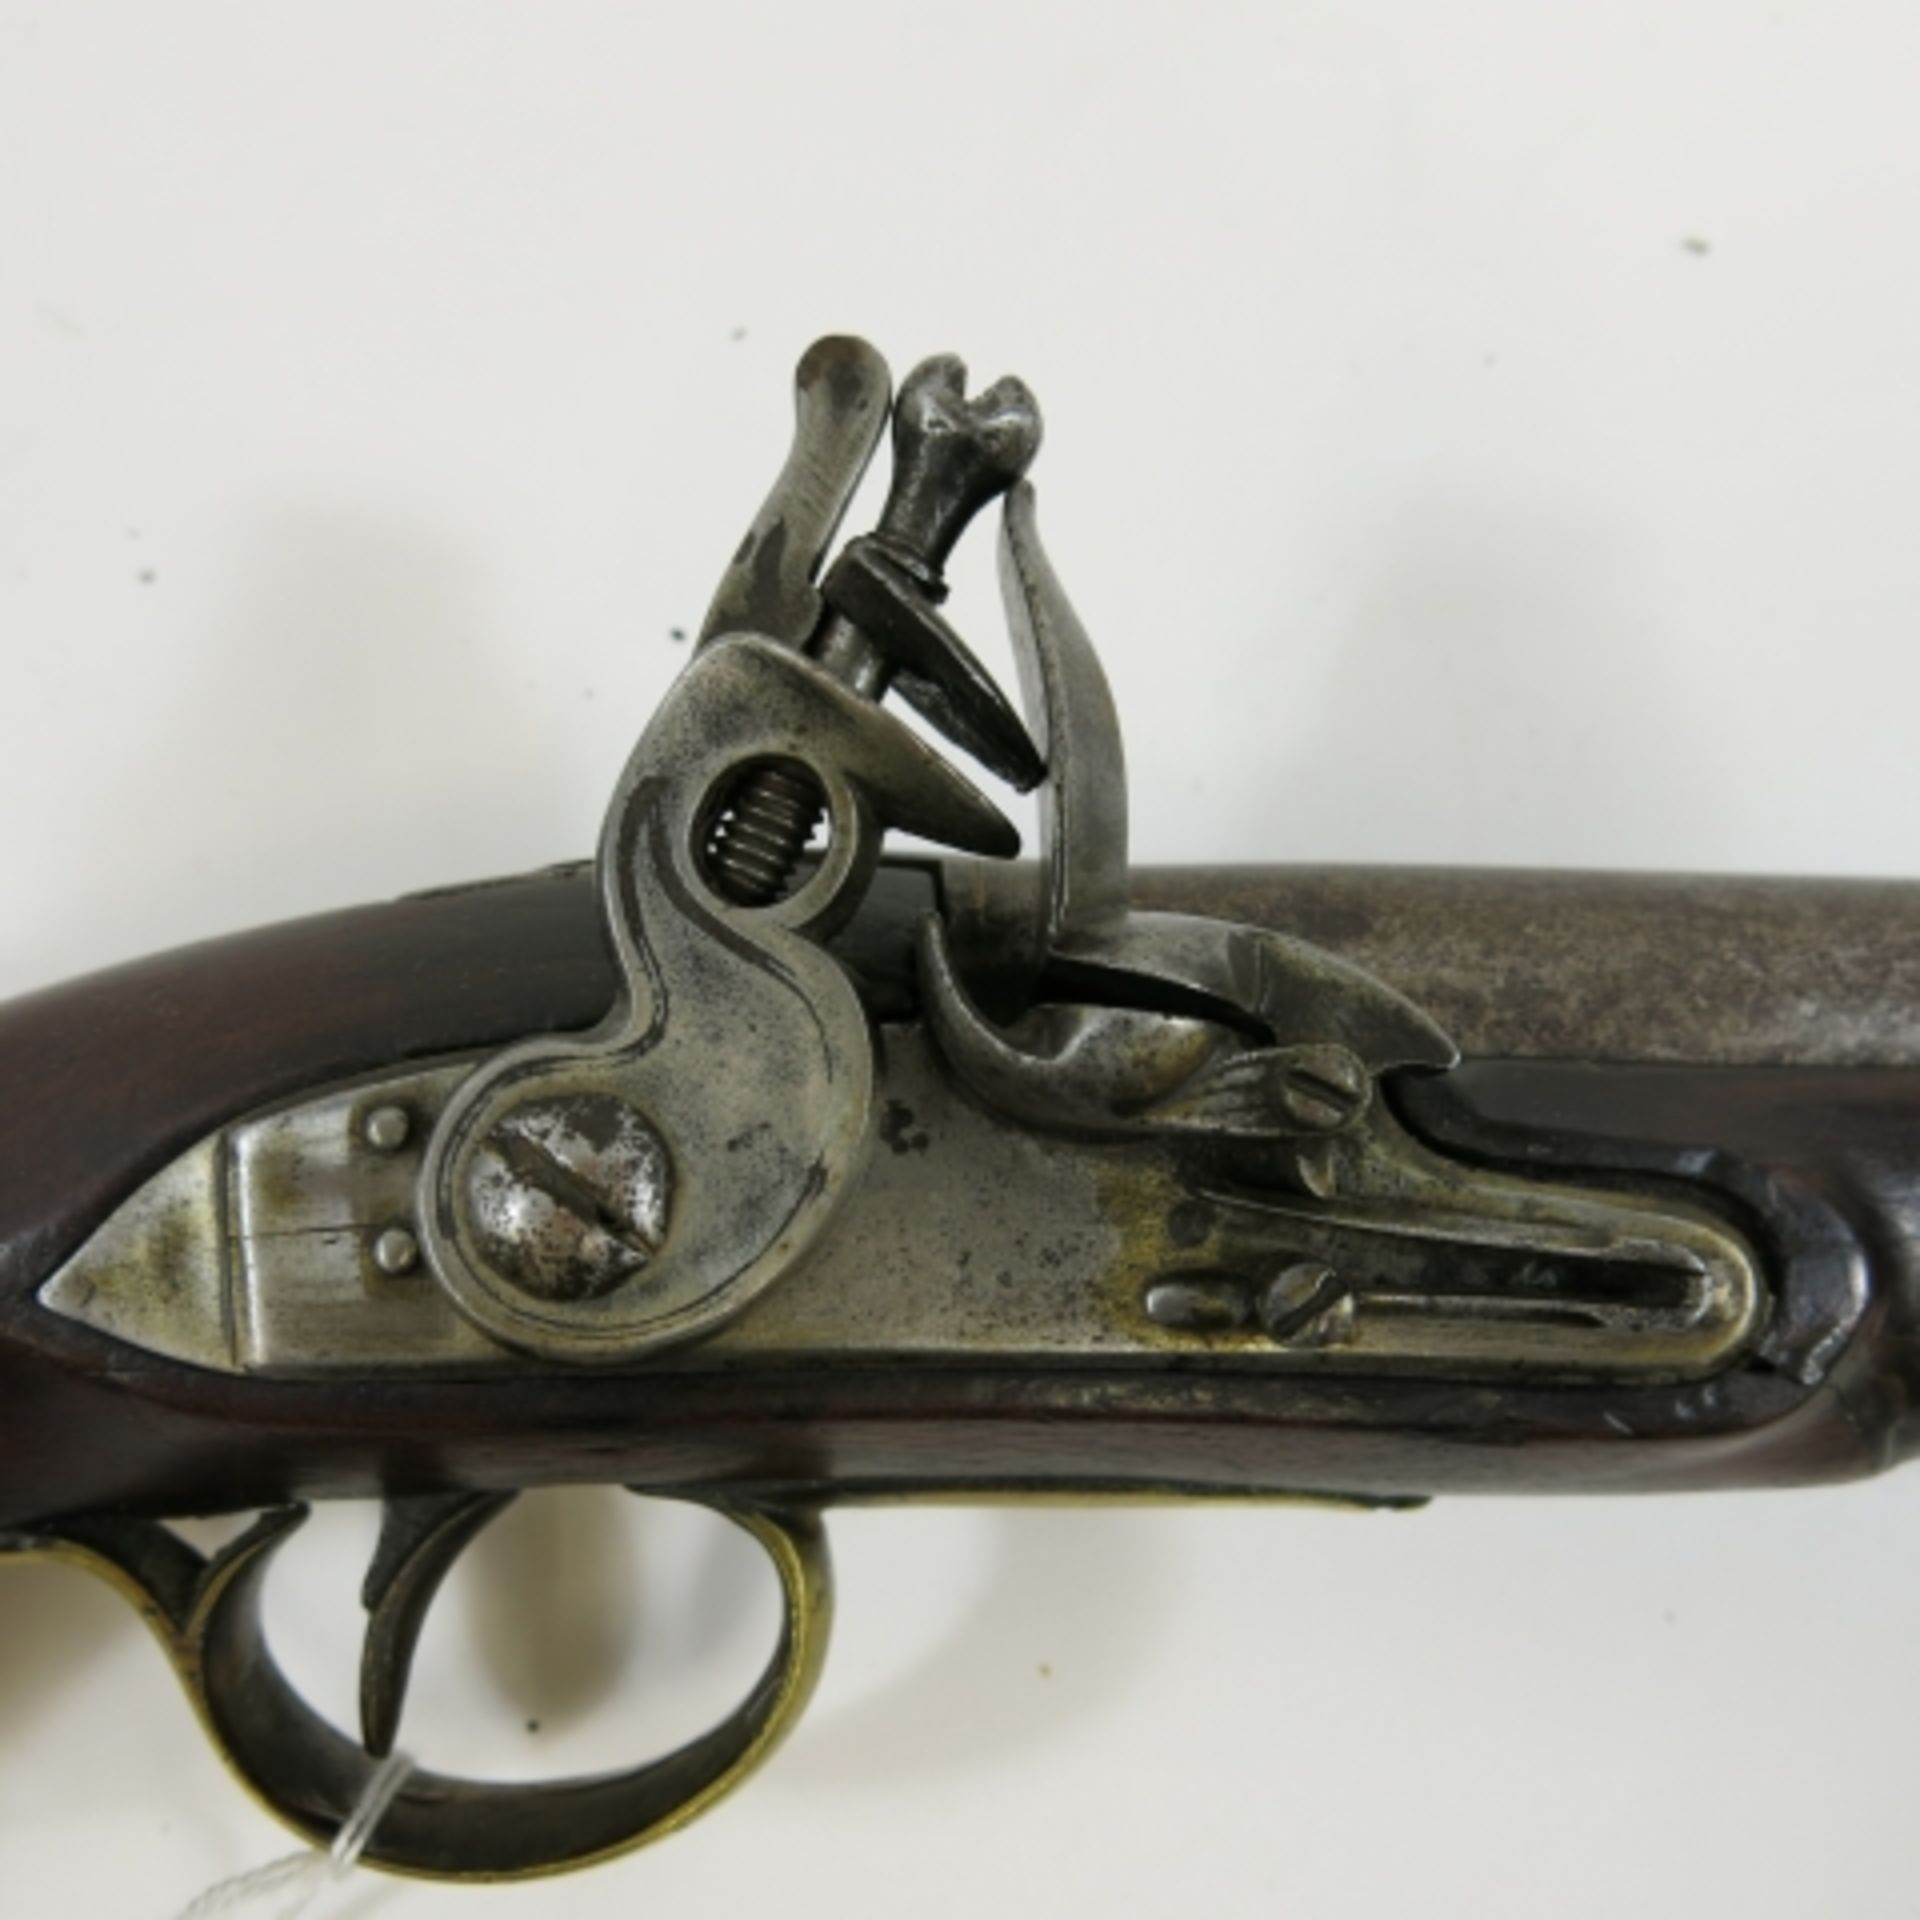 A Flintlock Pistol Newland Birmingham. 1 -75 caliber smooth bore pistol with steel stirrup ramrod - Image 3 of 3